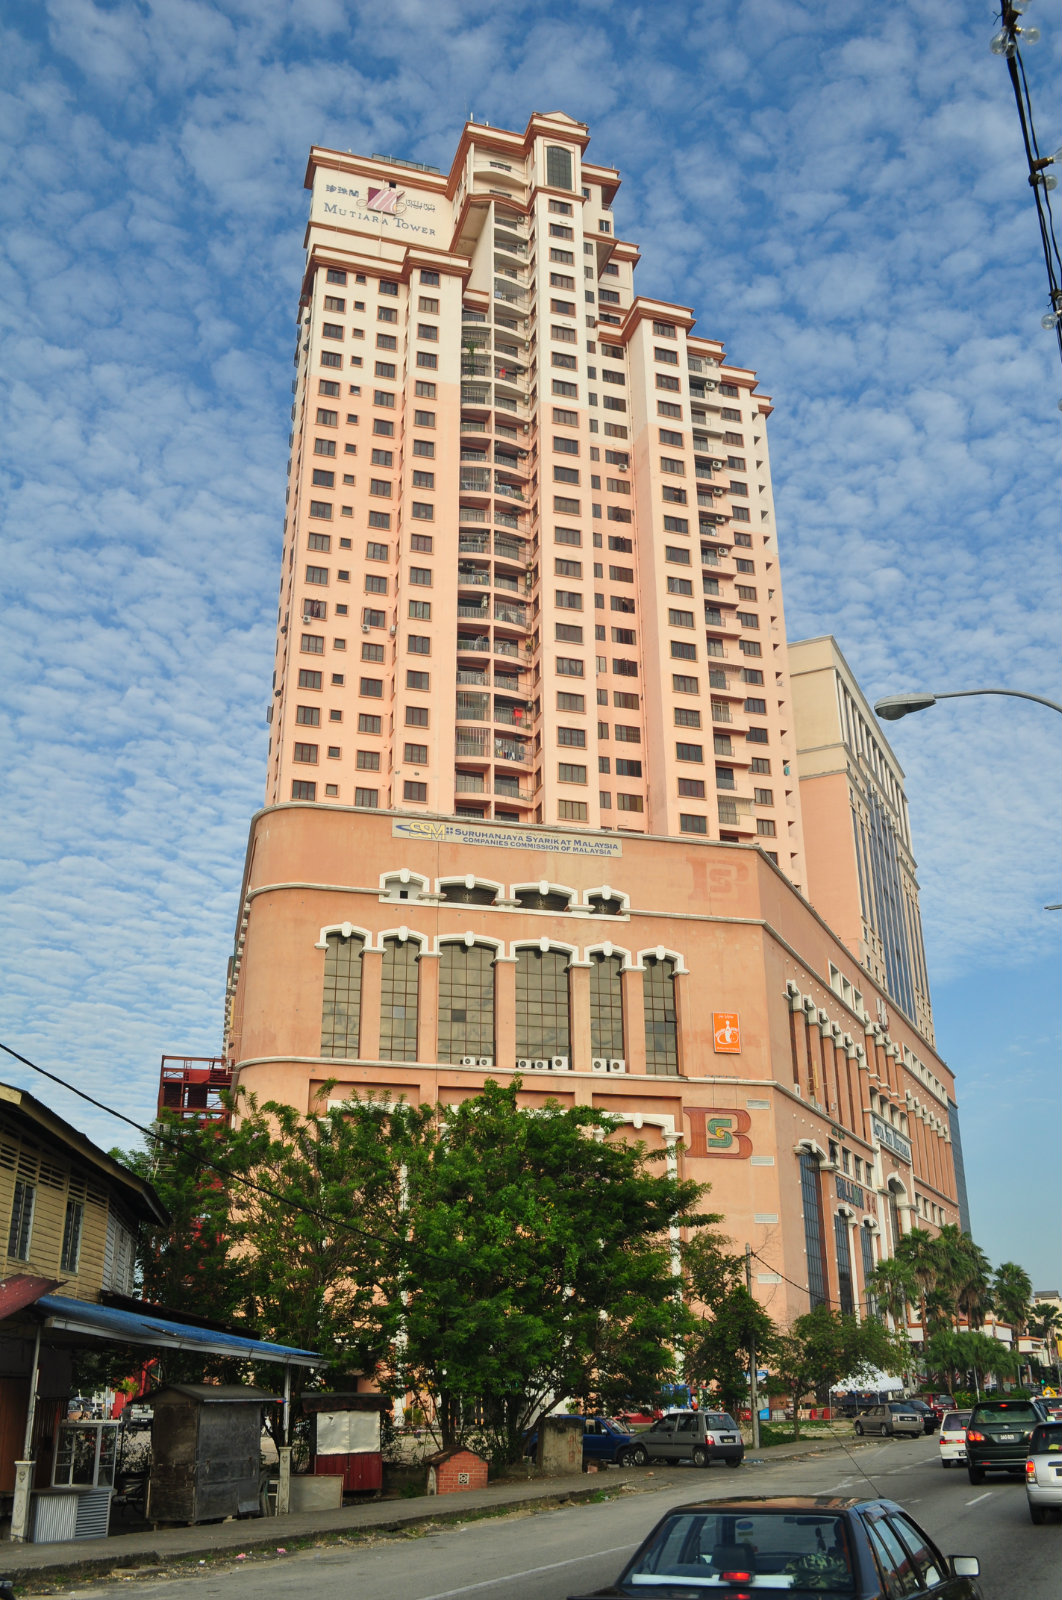 General View to Renaissance Hotel, Kota Bharu, Kelantan